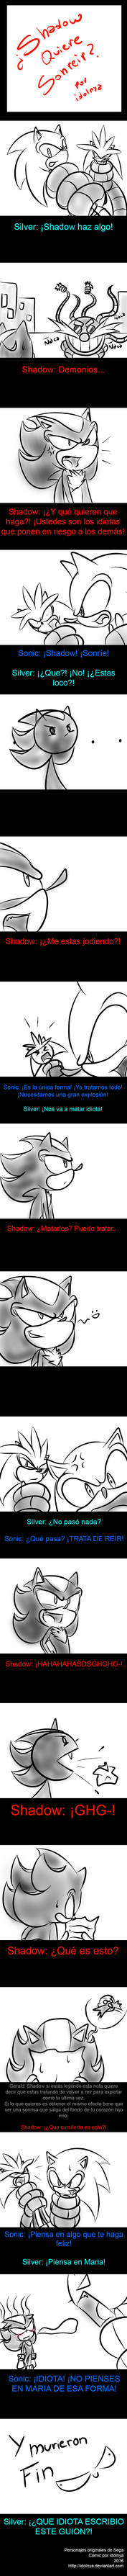 Shadow Quiere Sonreir?